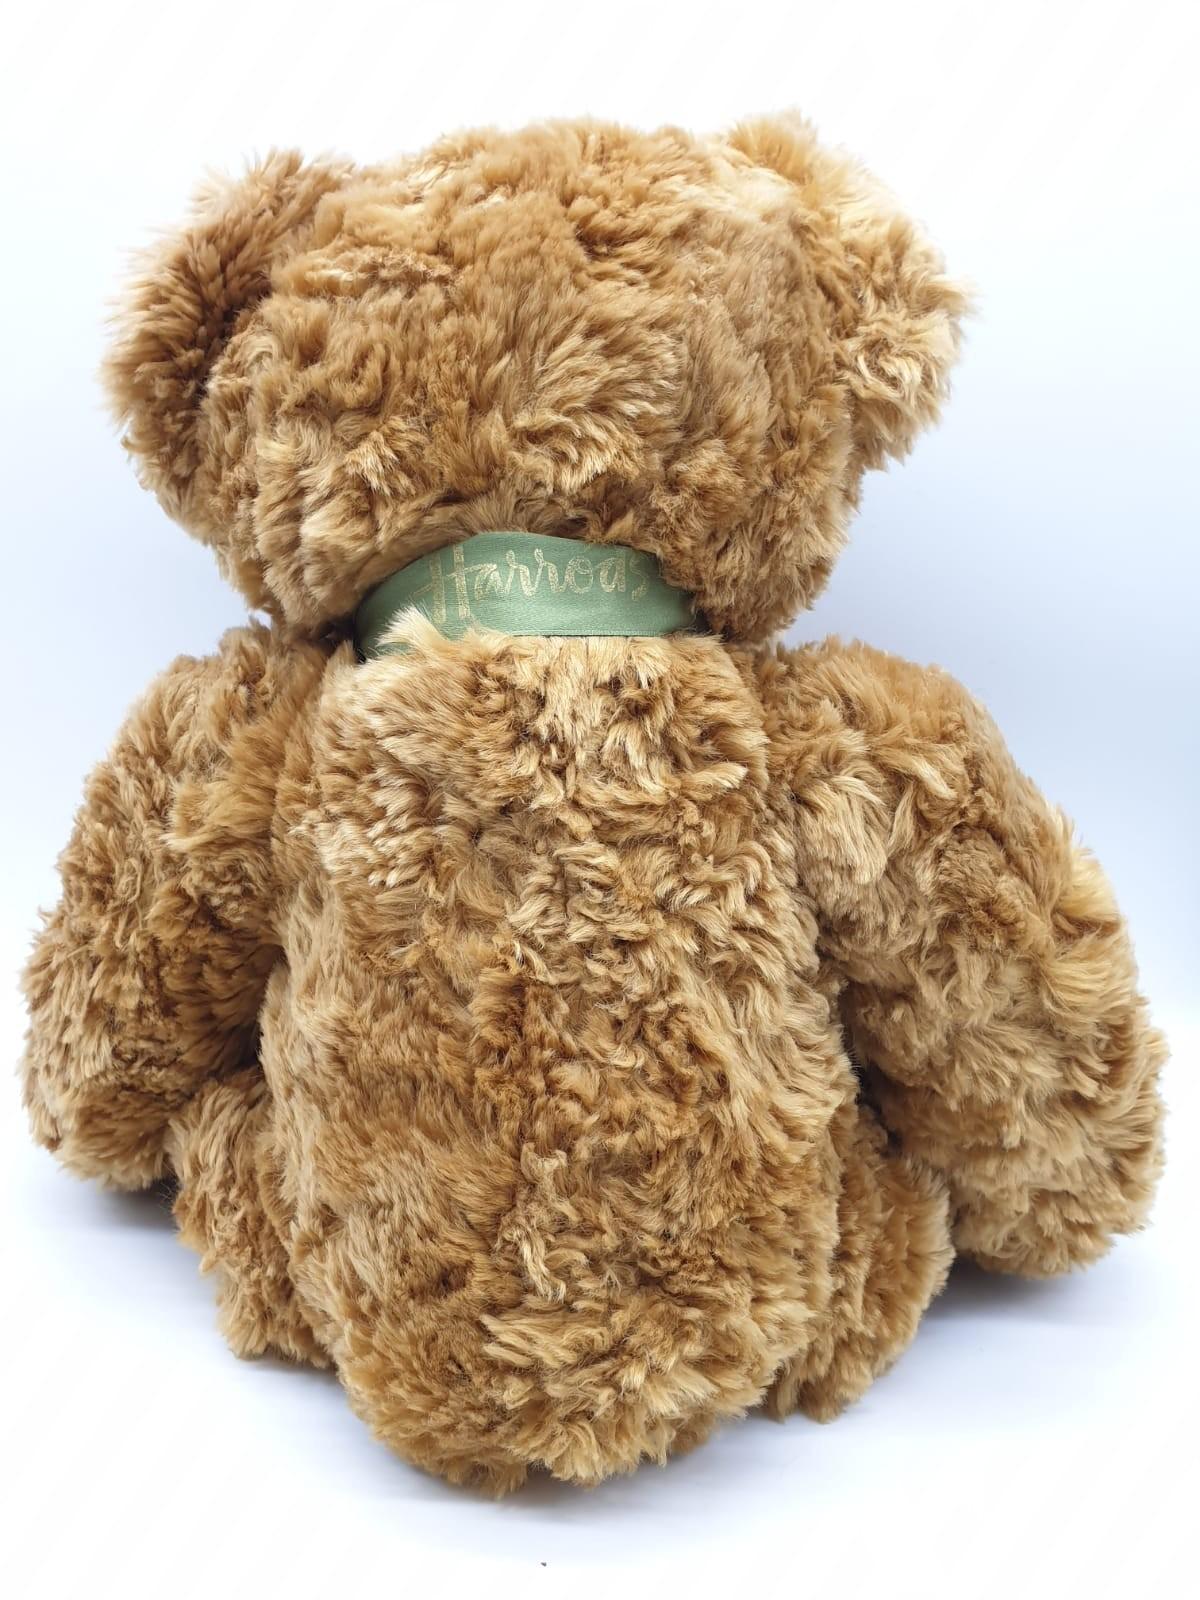 A Harrods Teddy Bear 1990's Approx 30cms - Image 4 of 6